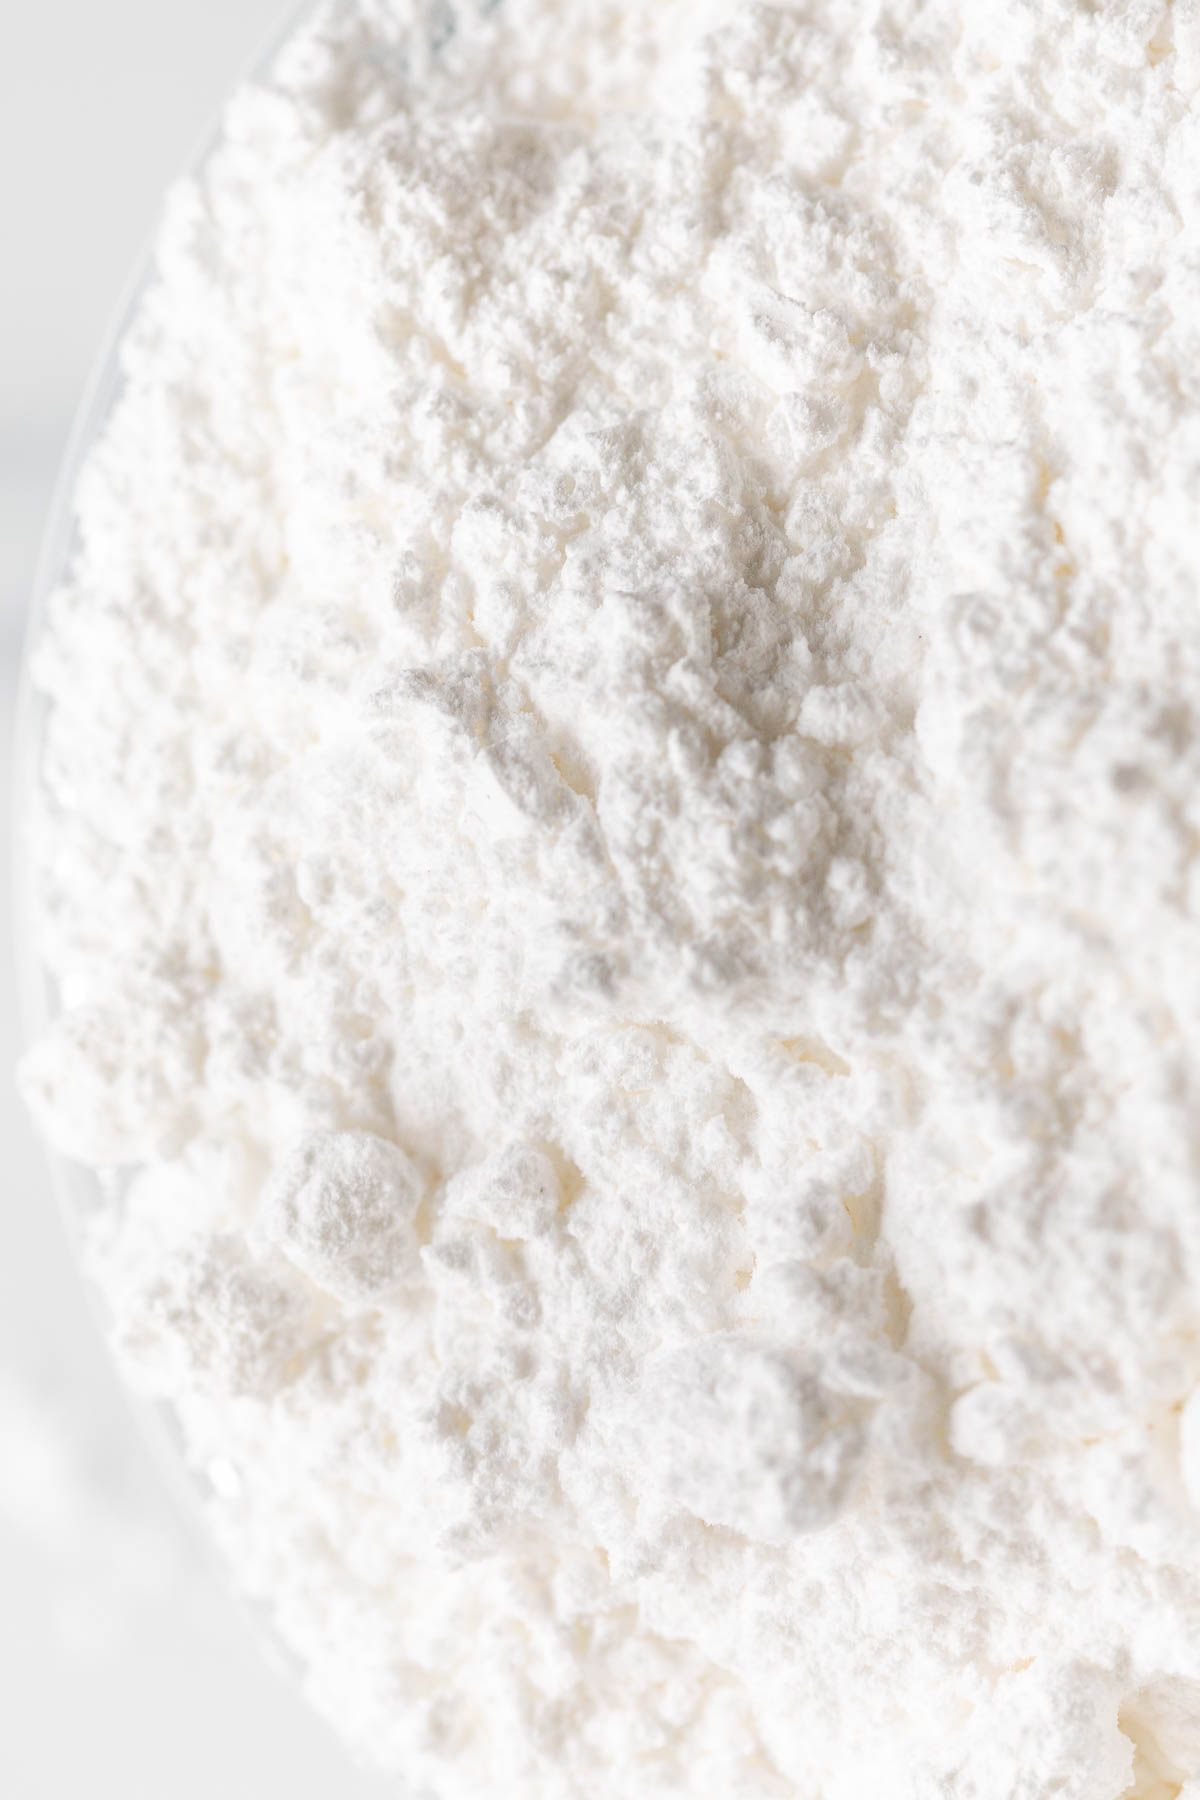 A close up of homemade powdered sugar